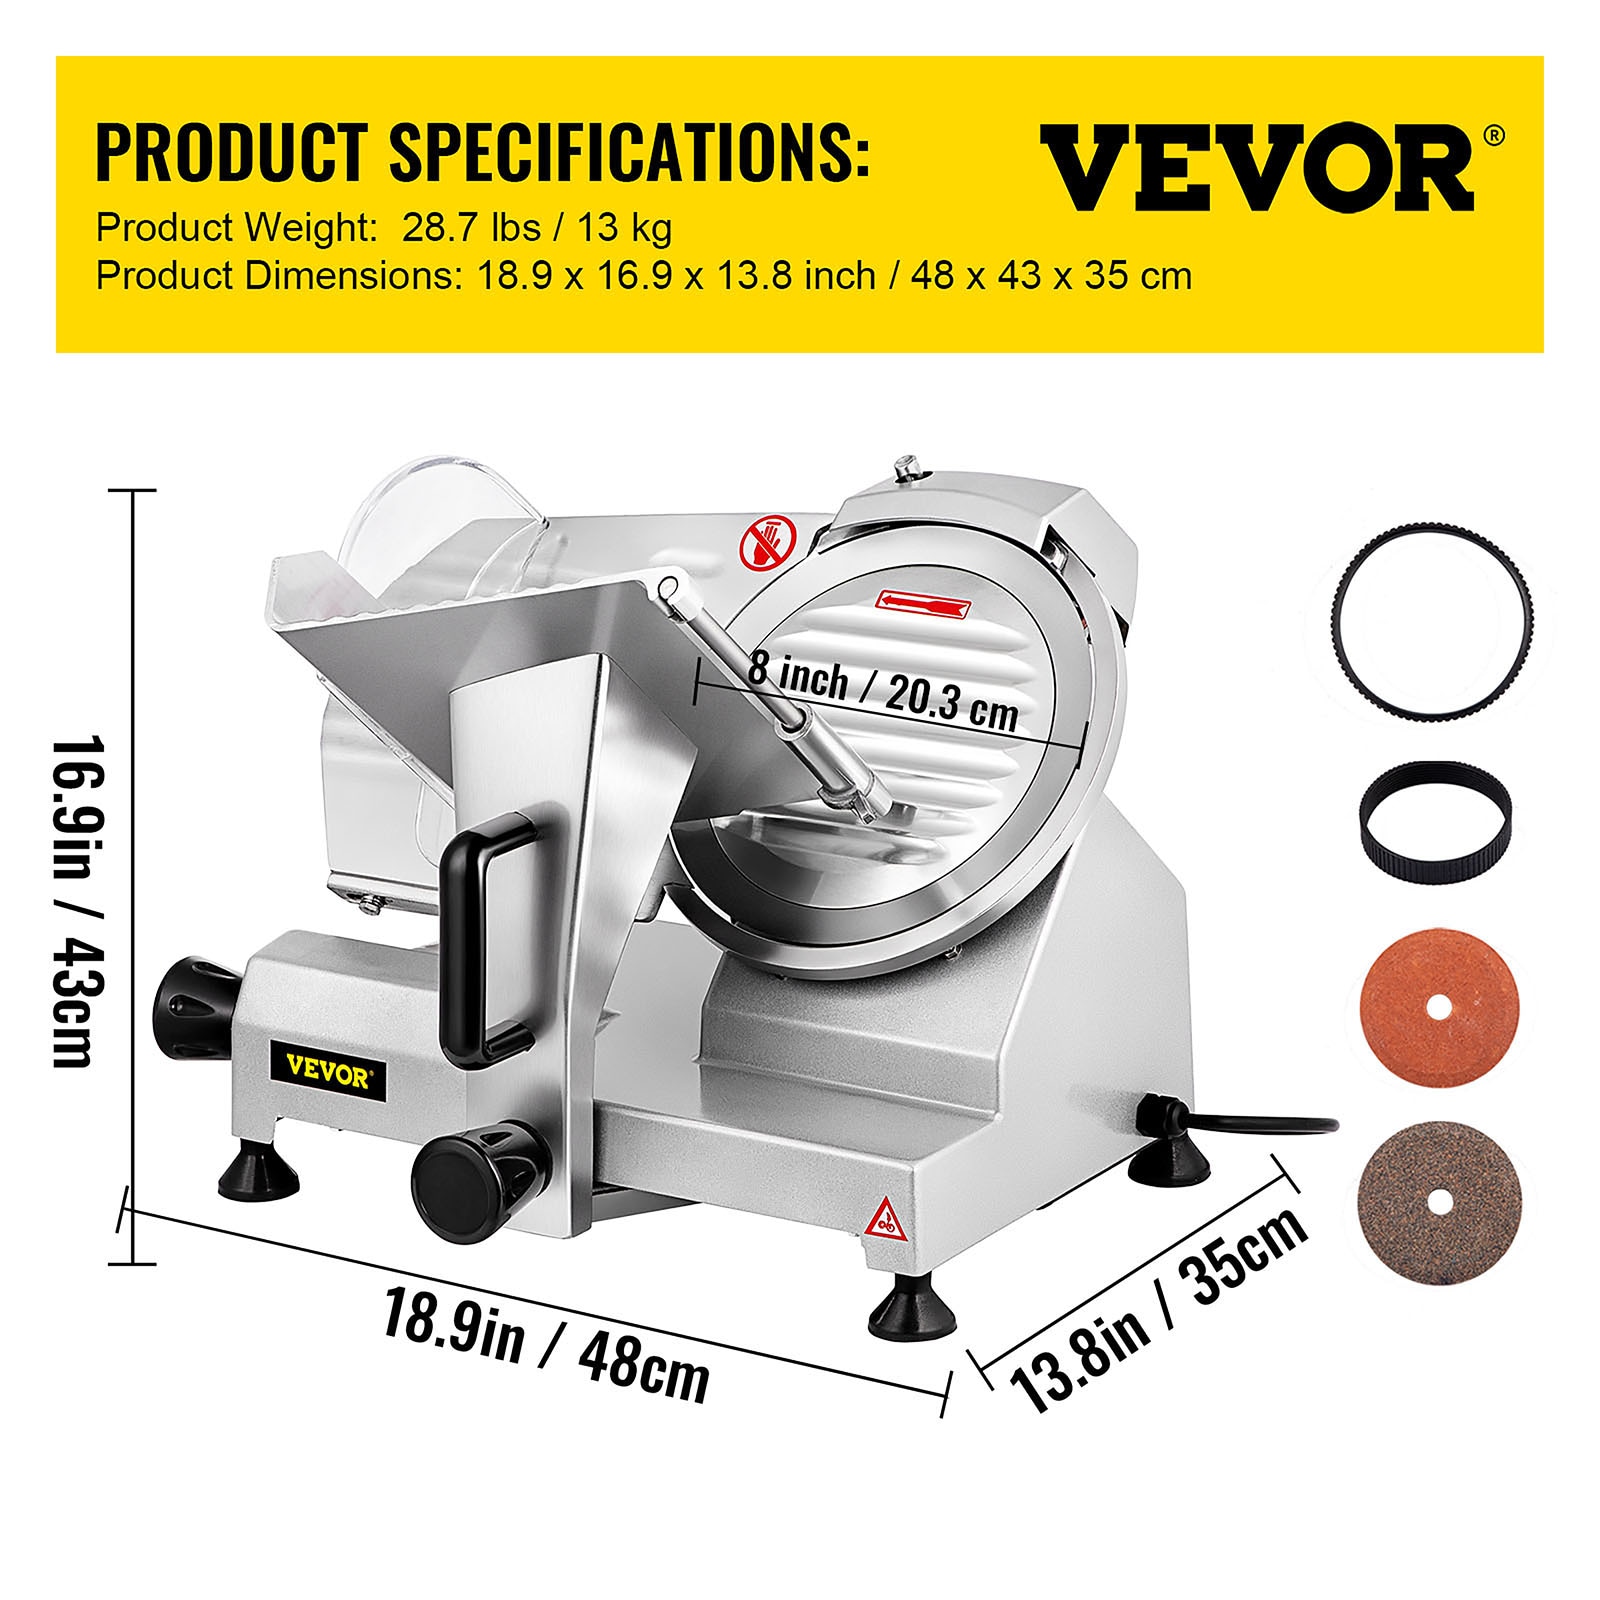 VEVOR Commercial Can Opener, 18.9/48cm Long, Stainless Steel